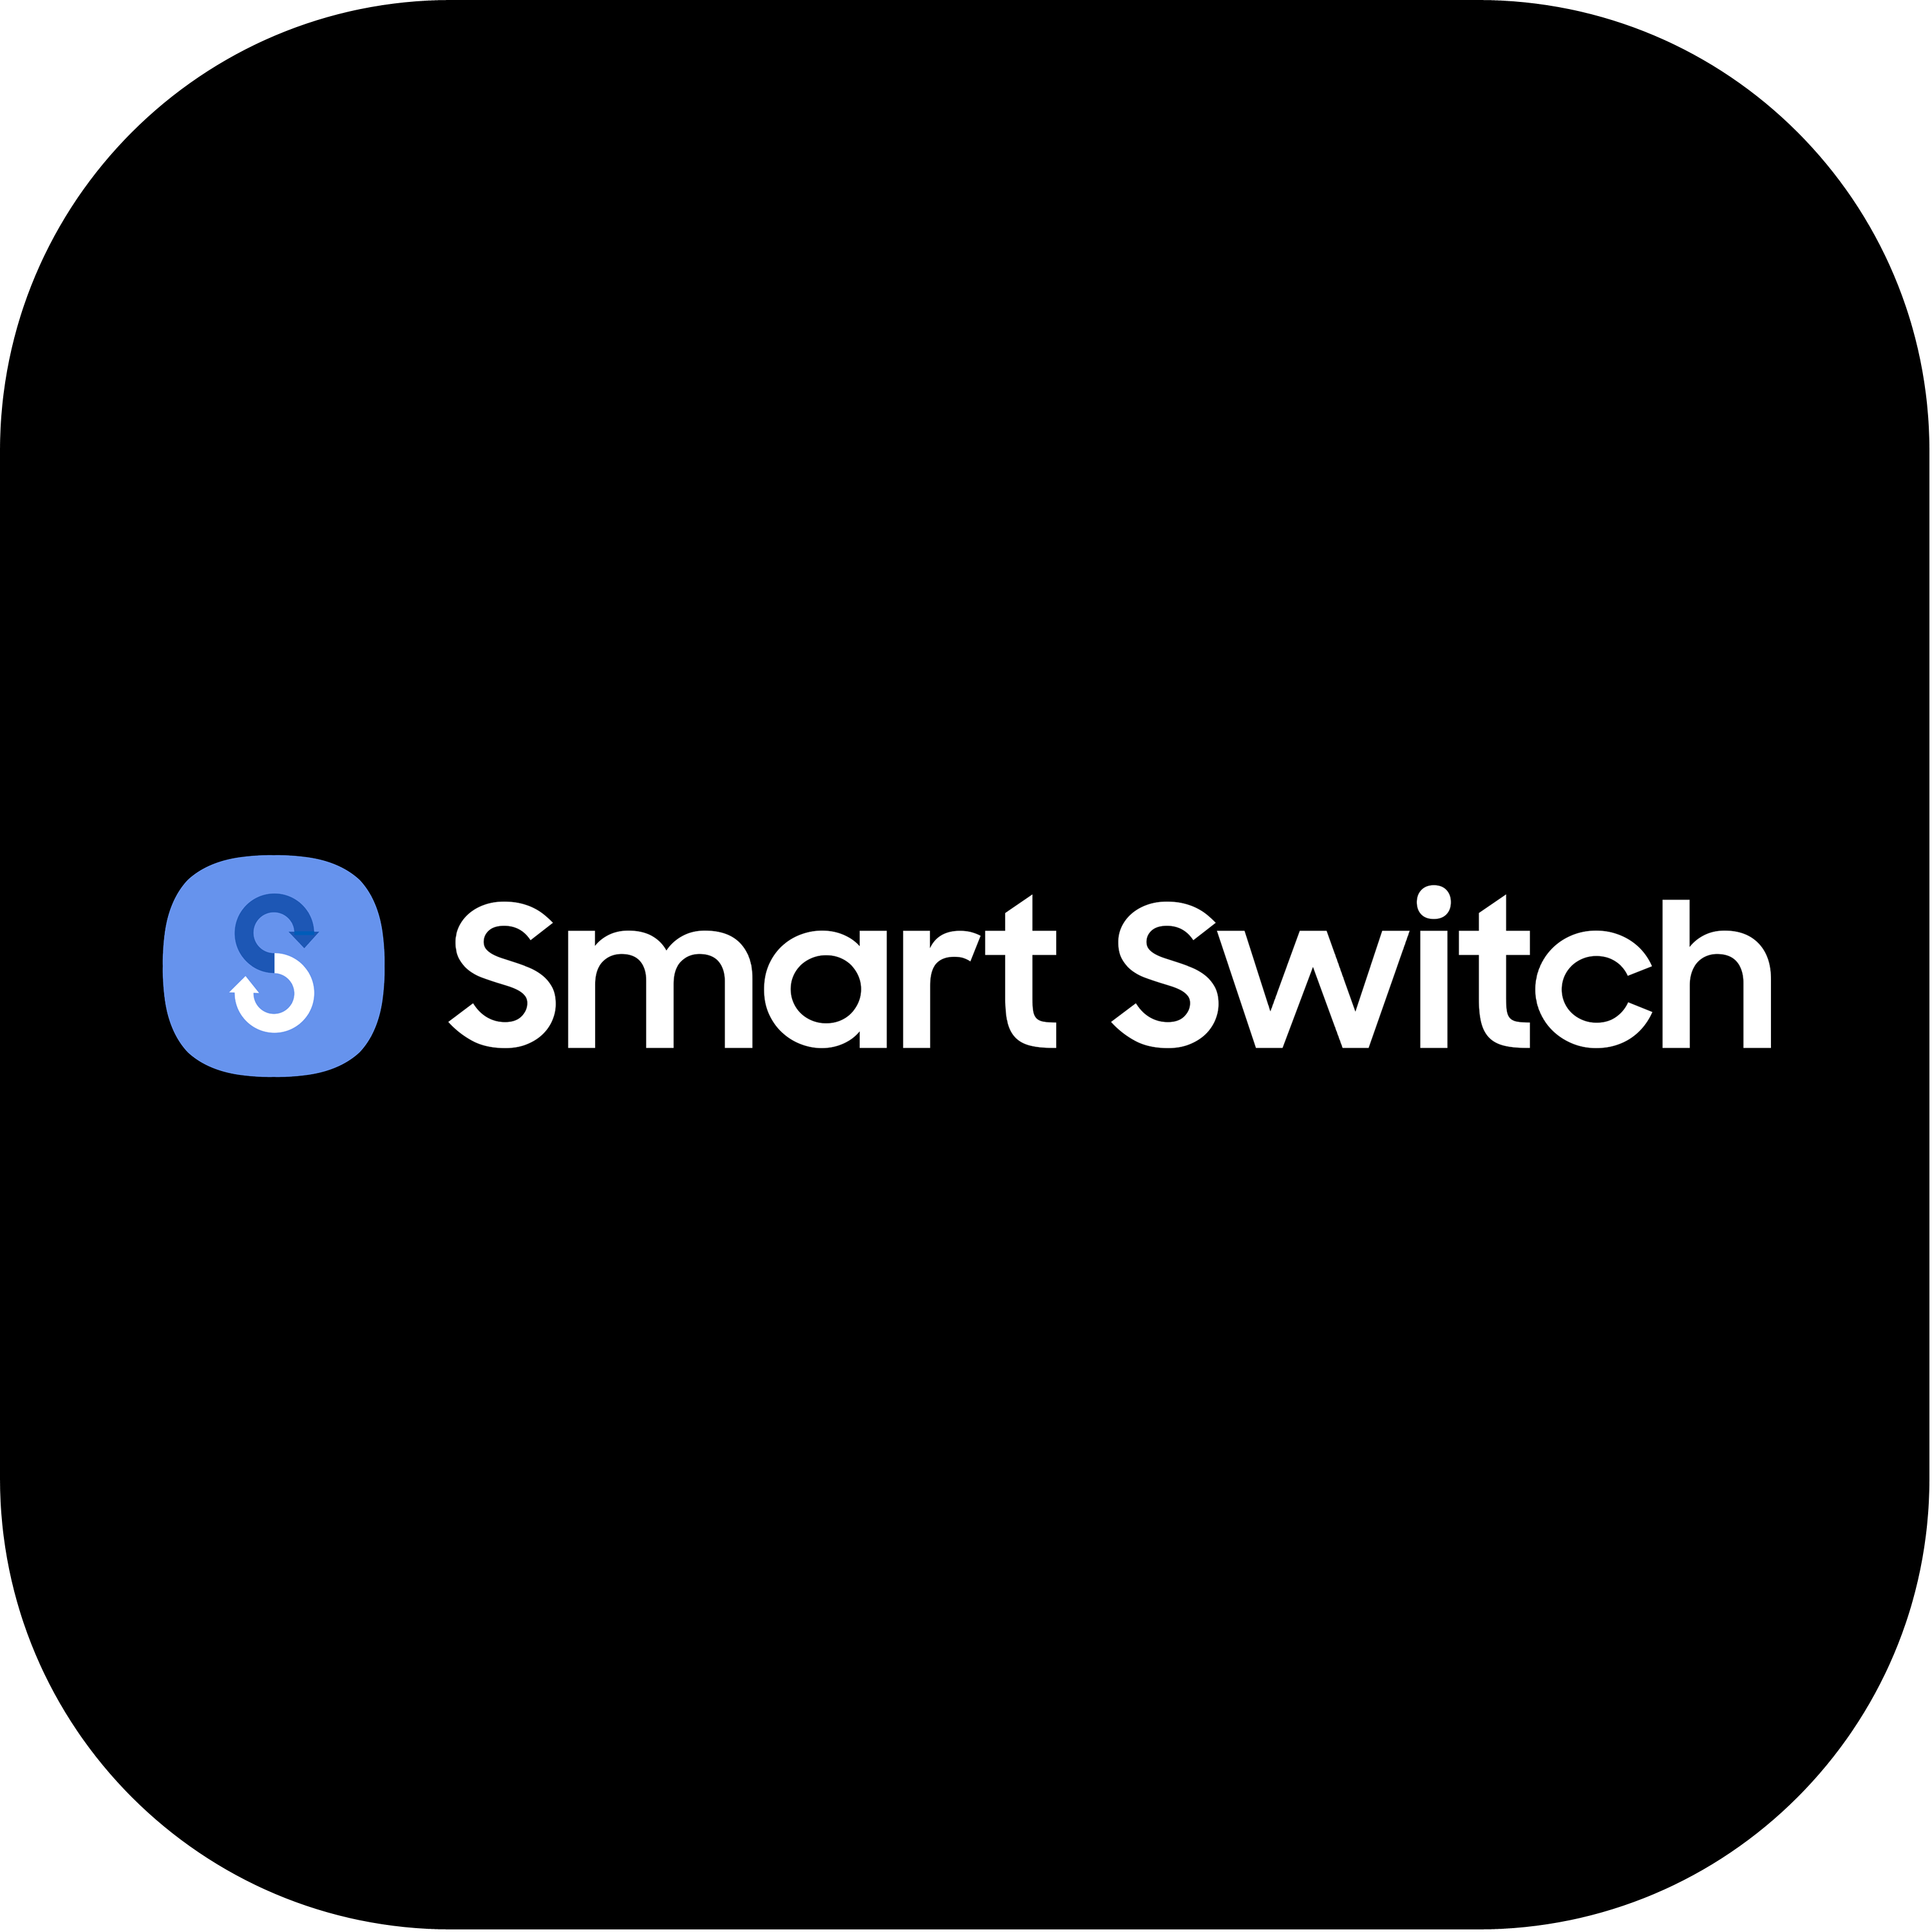 Samsung Smart Switch Logo Transparent Picture